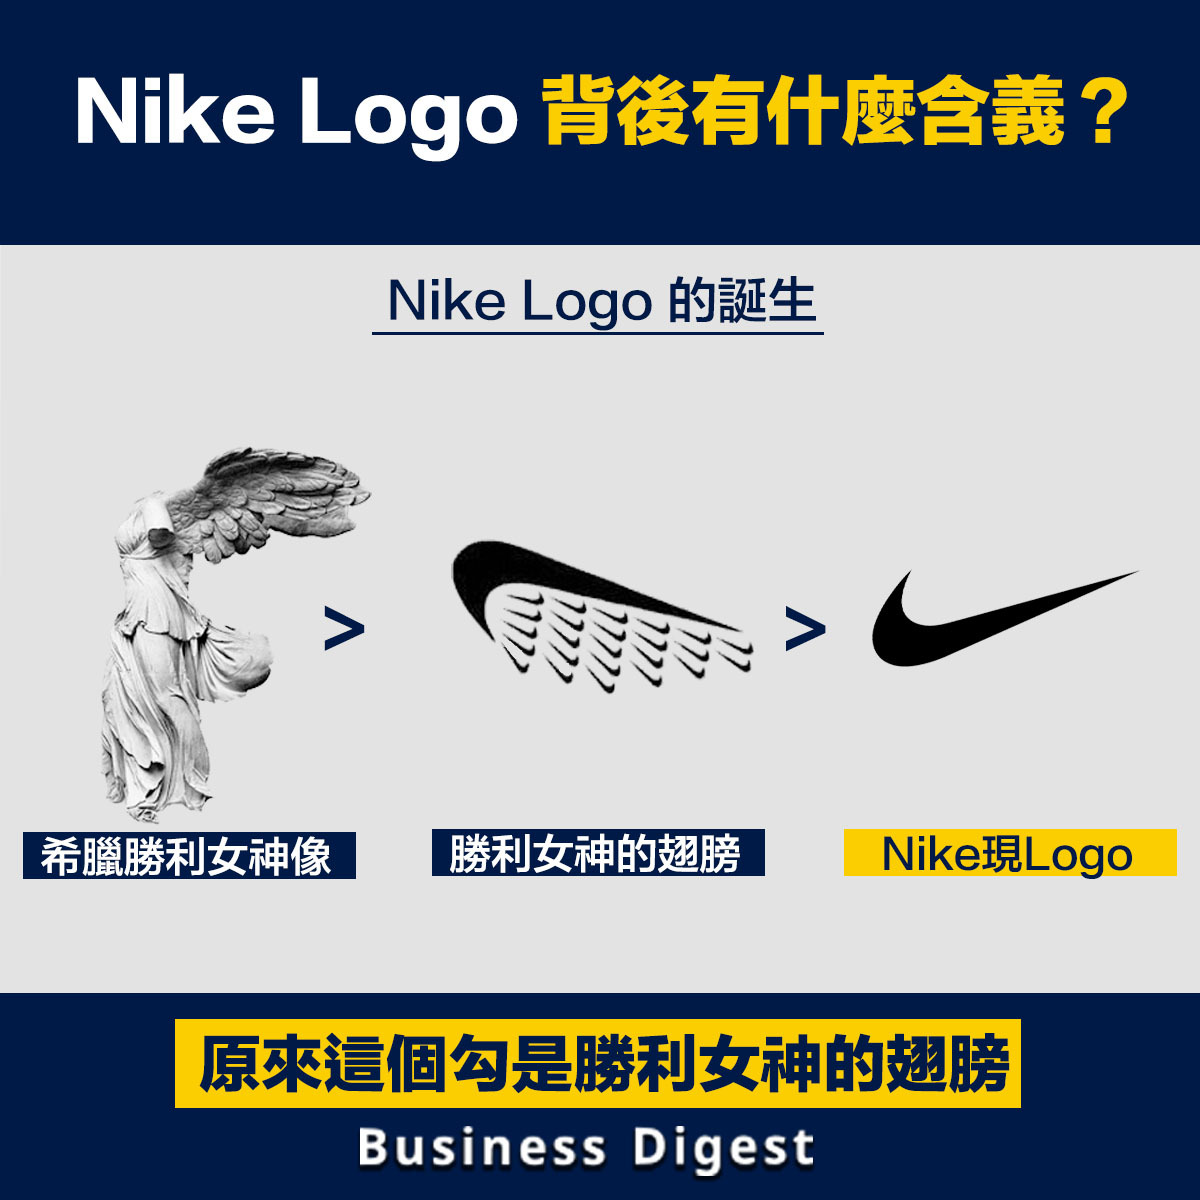 Nike Logo背後有什麼含義？